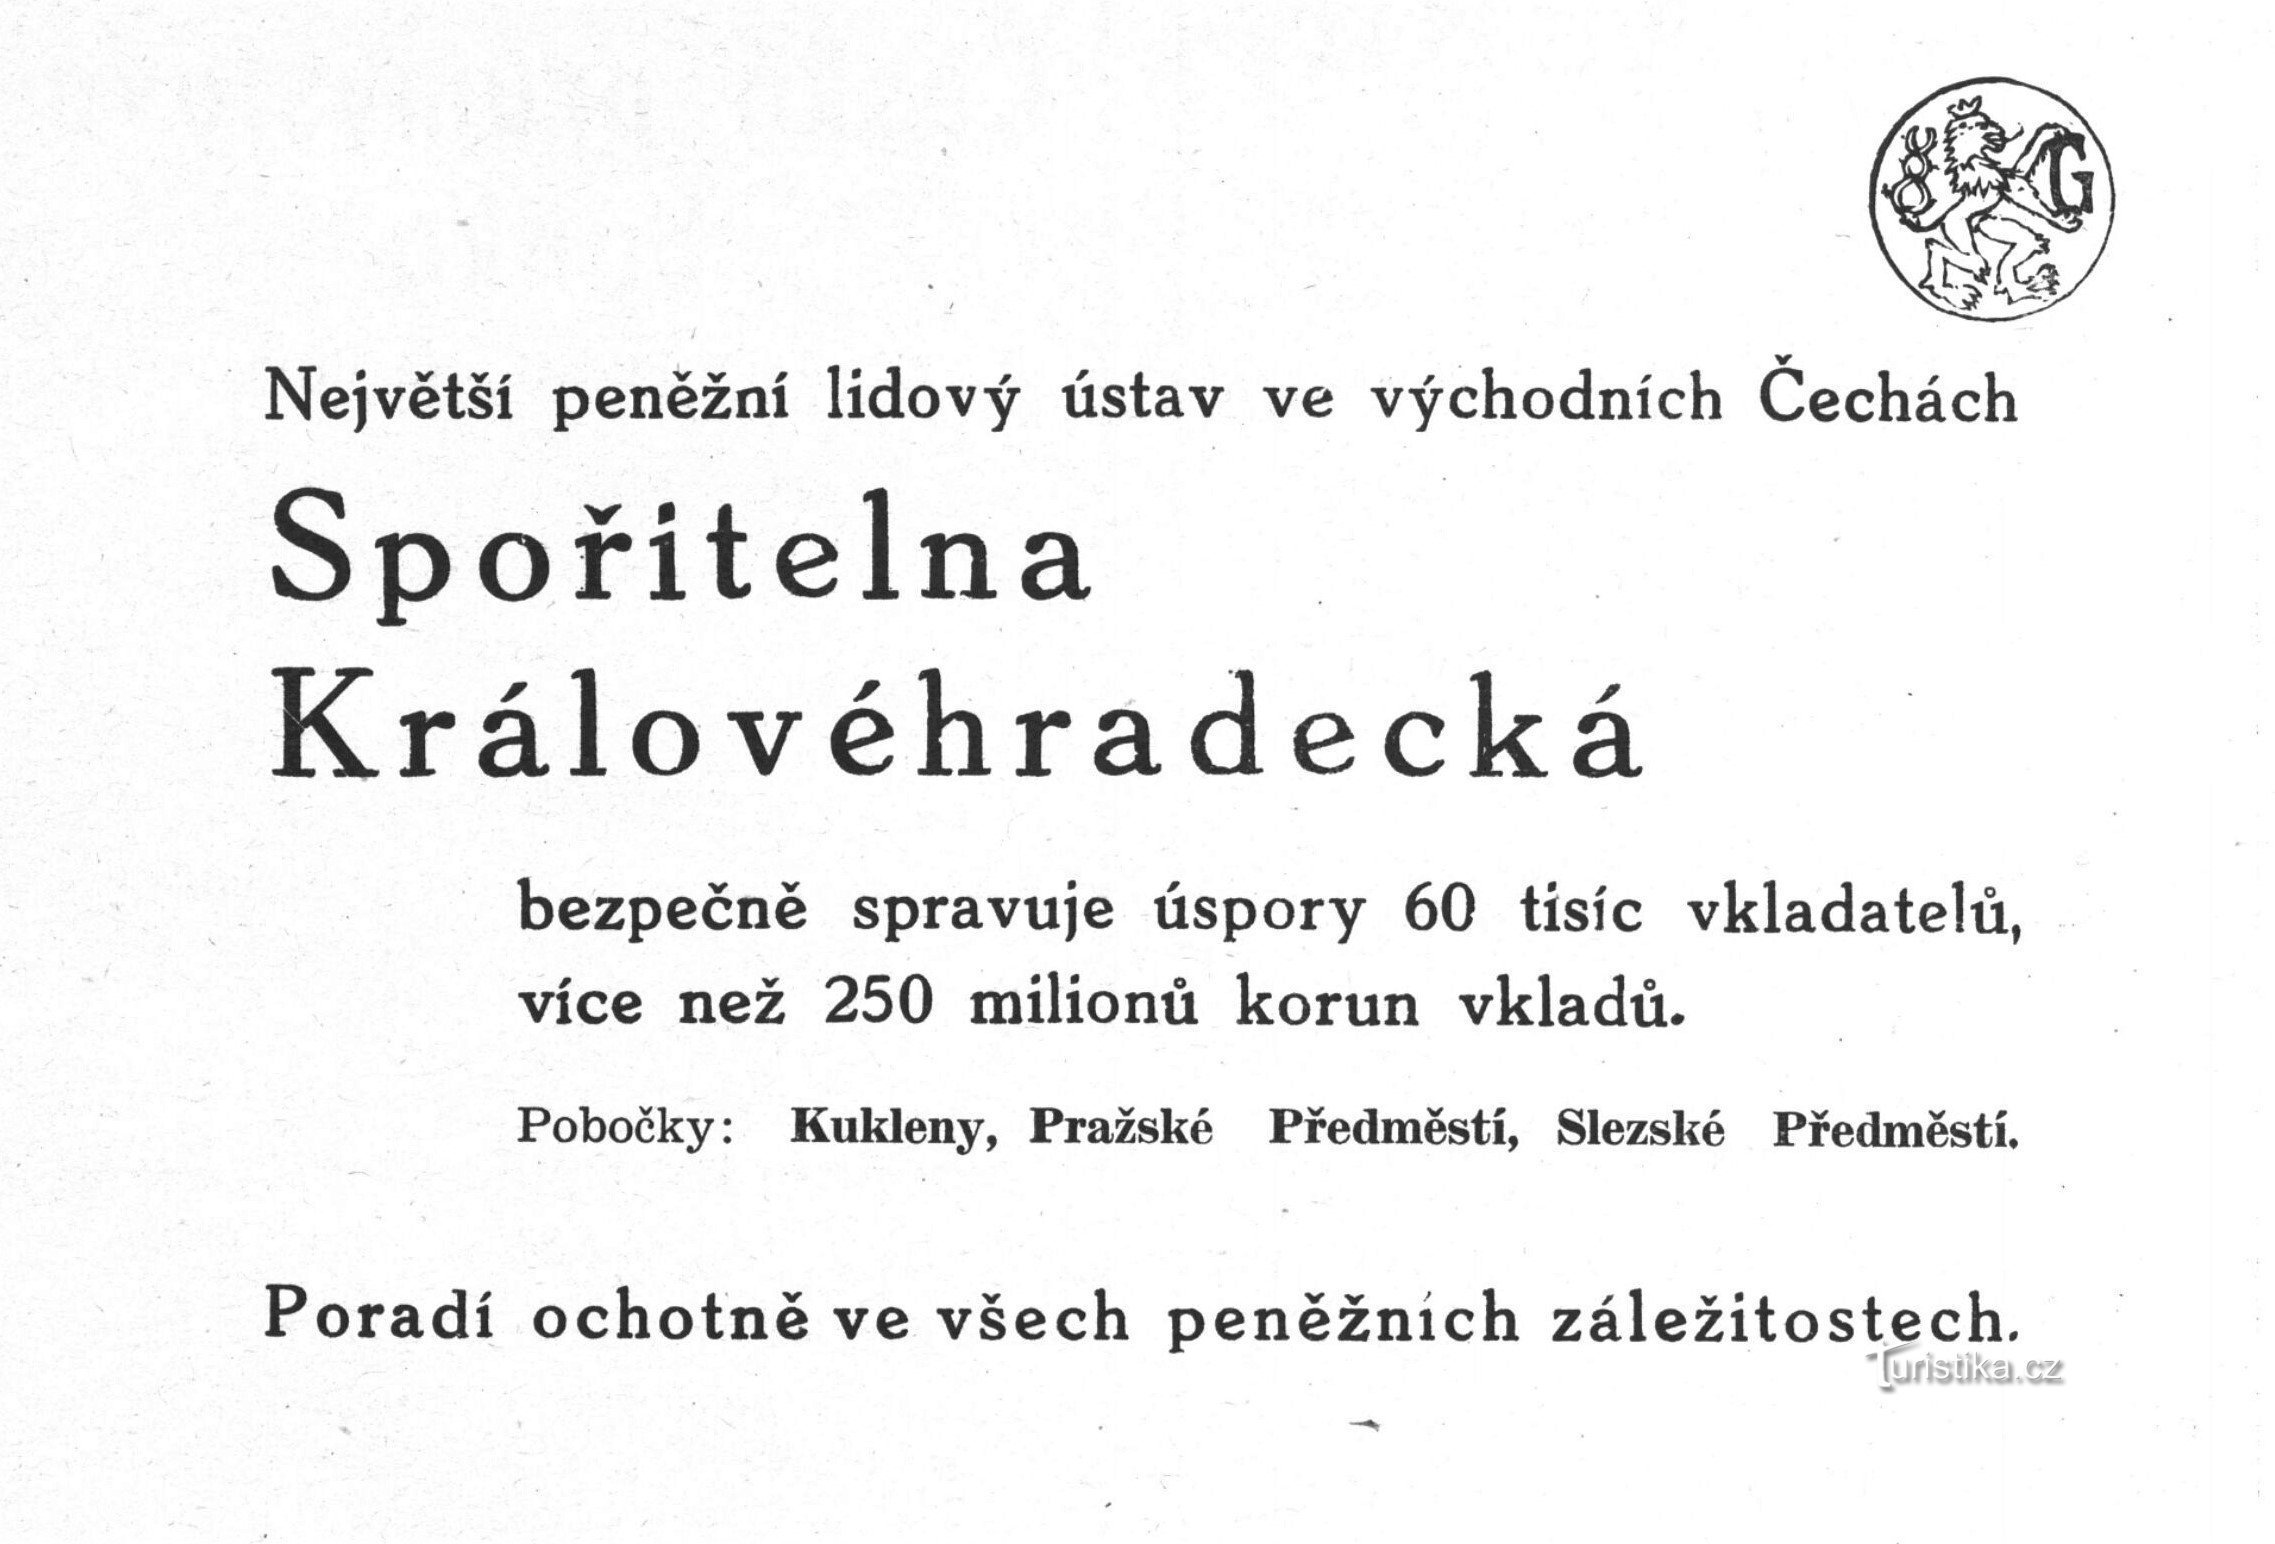 Advertentie van Spořitelna Královéhradecké uit 1941